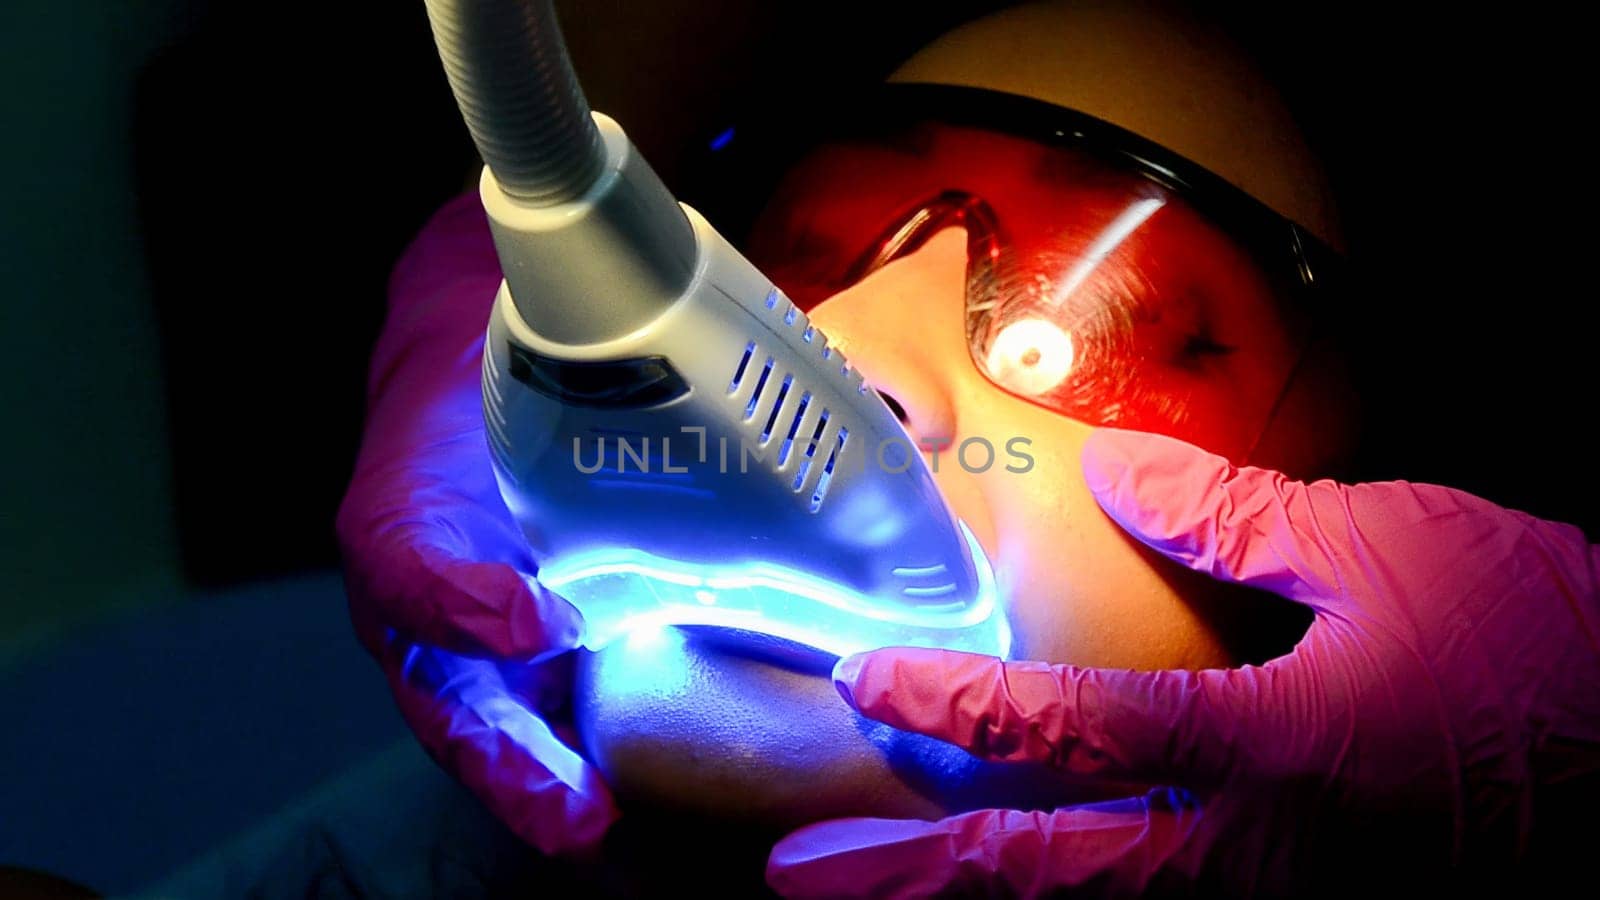 Innovative dental treatment with ultraviolet light by Peruphotoart